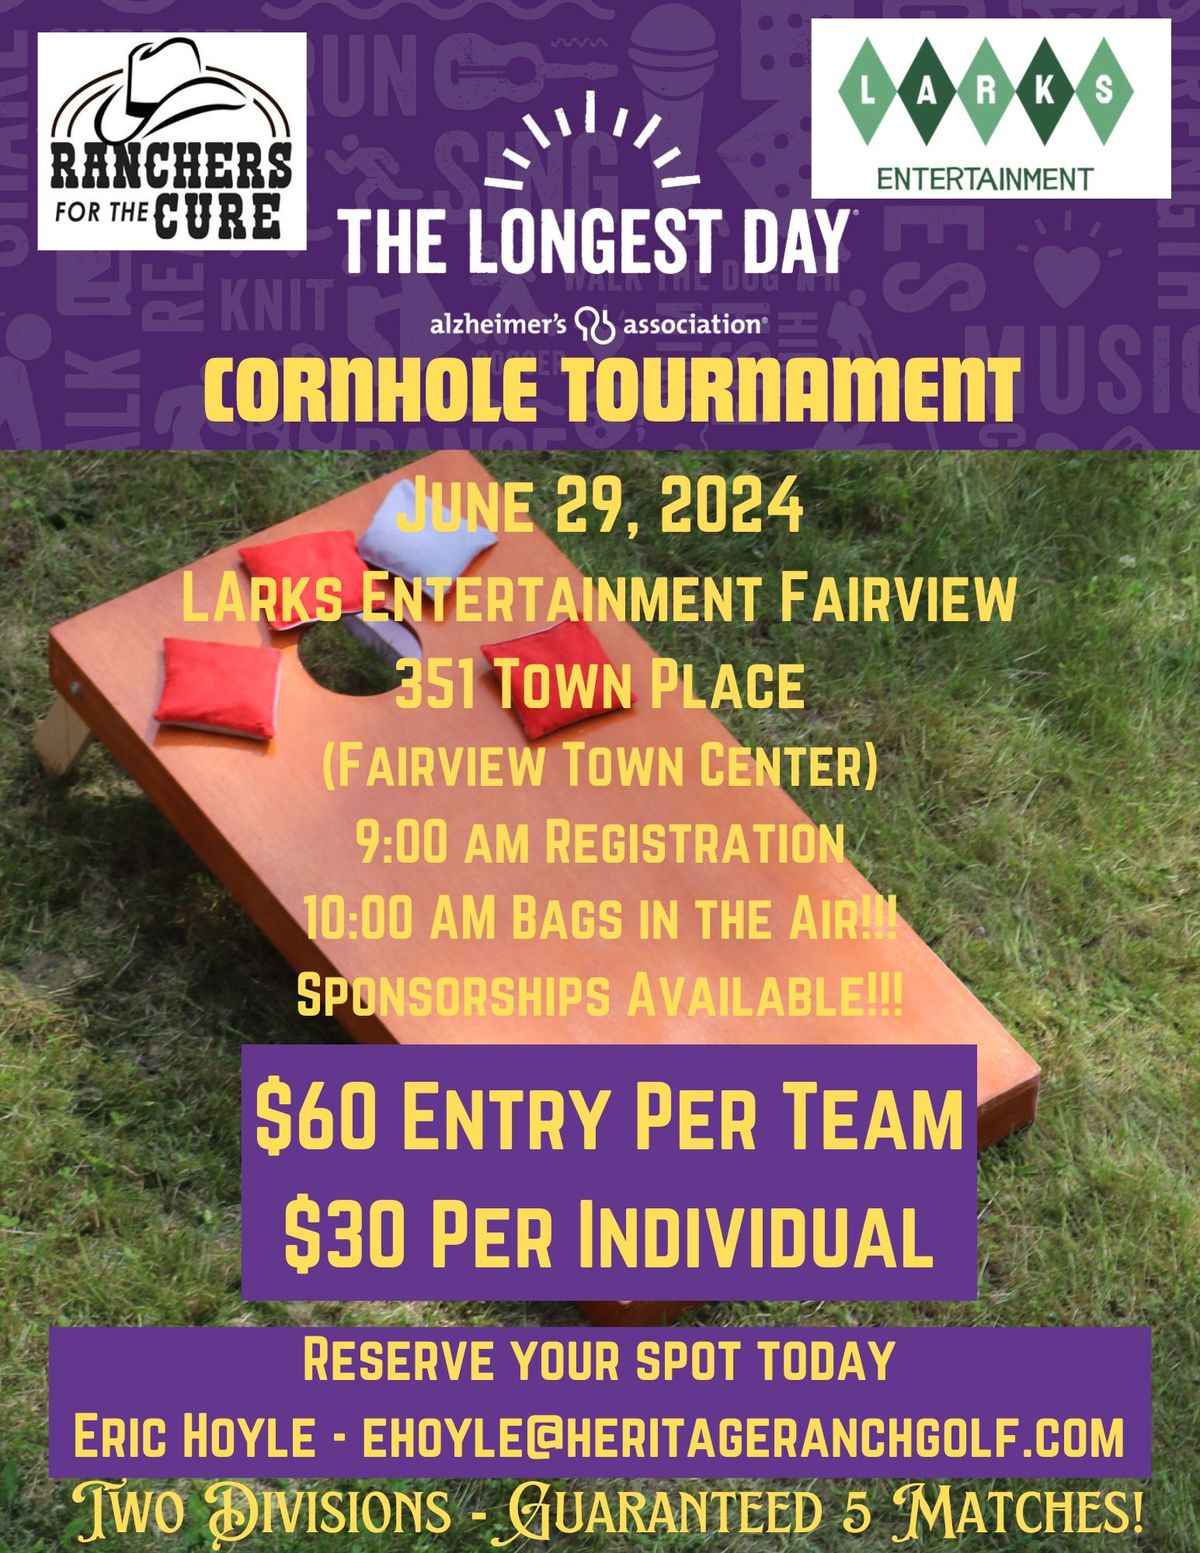 The Longest Day Cornhole Tournament